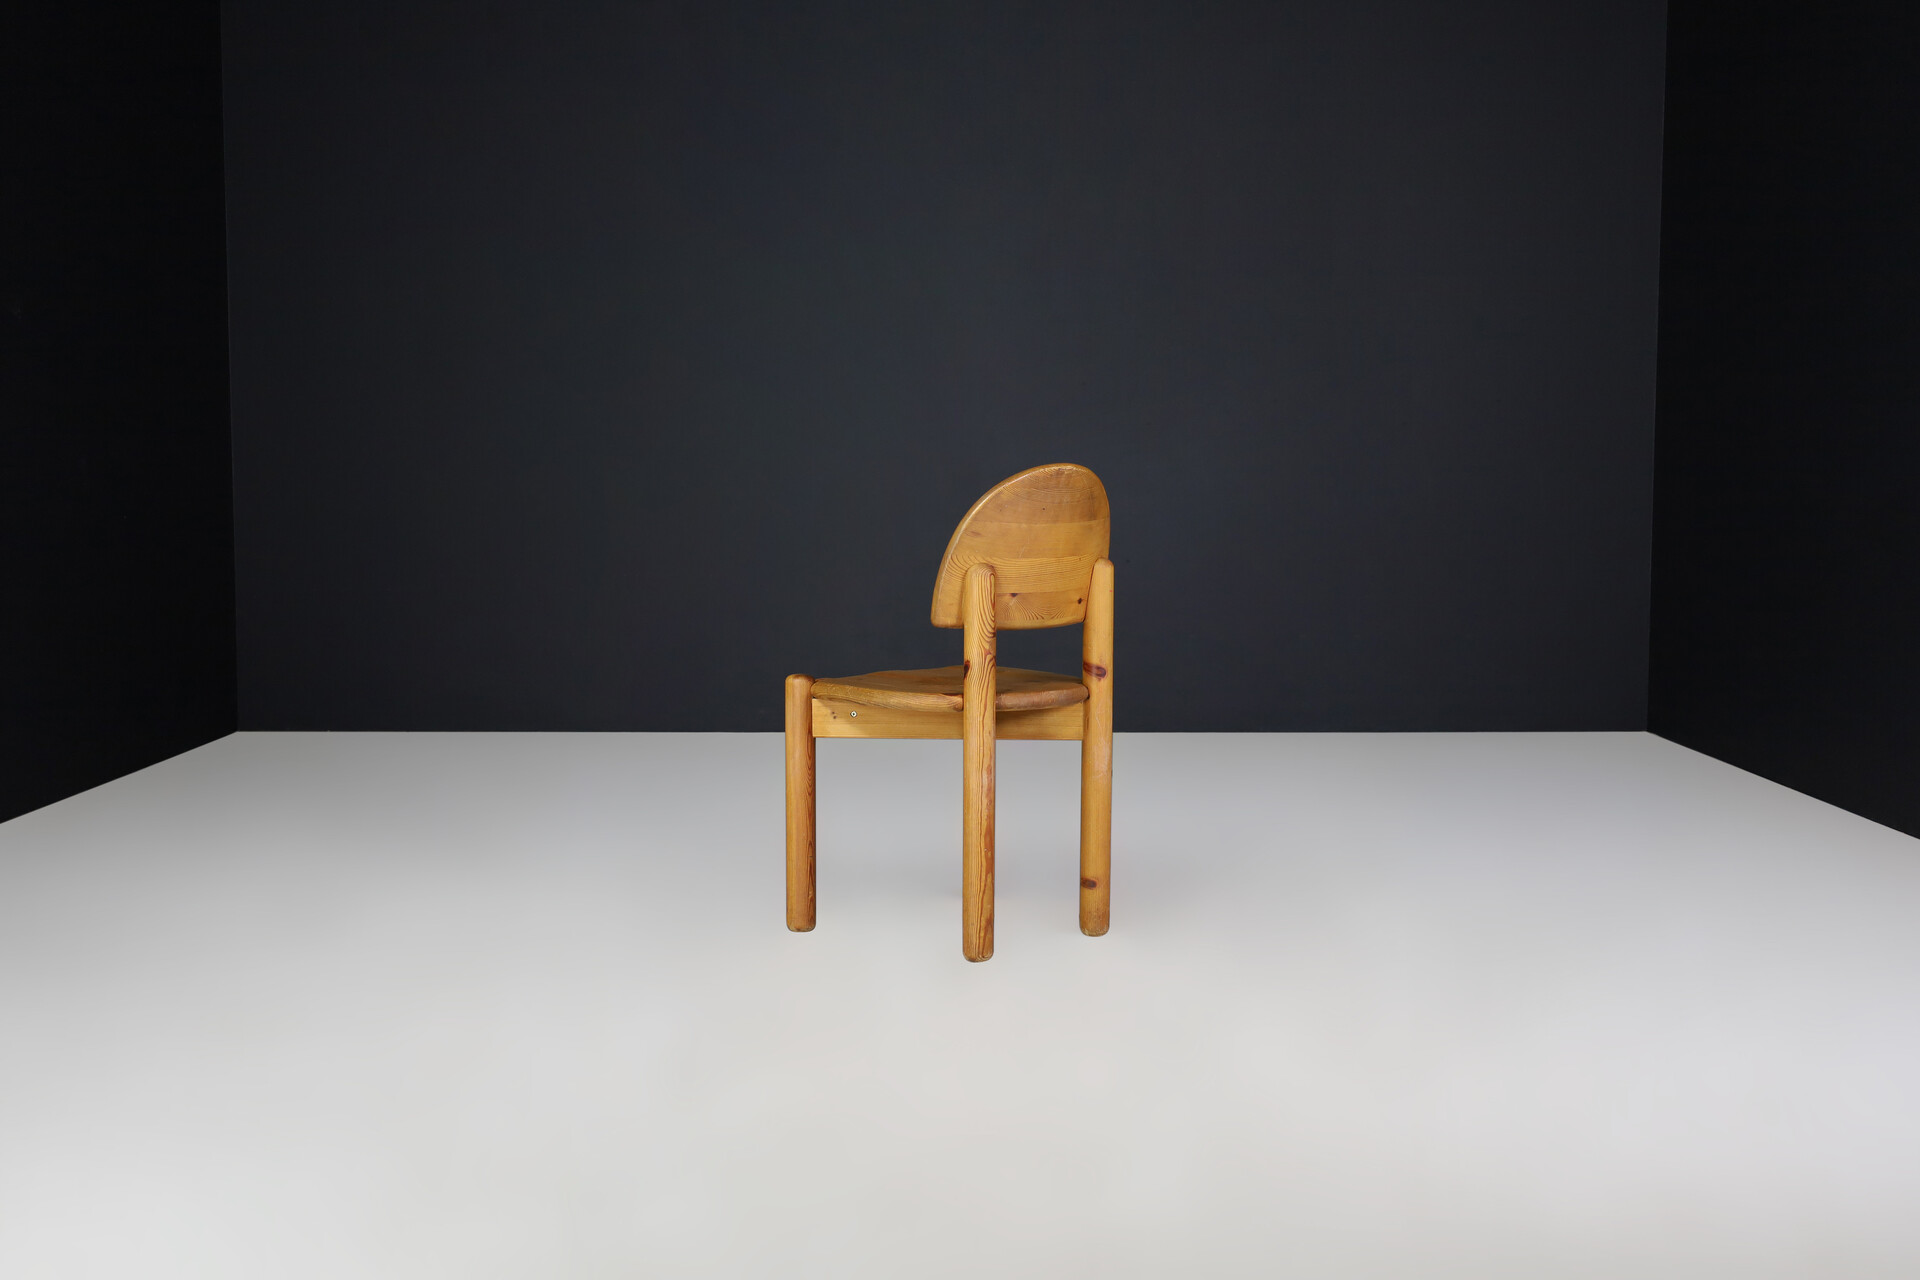 Scandinavian modern Rainer Daumiller Chairs in Pine, Denmark 1970s Mid-20th century